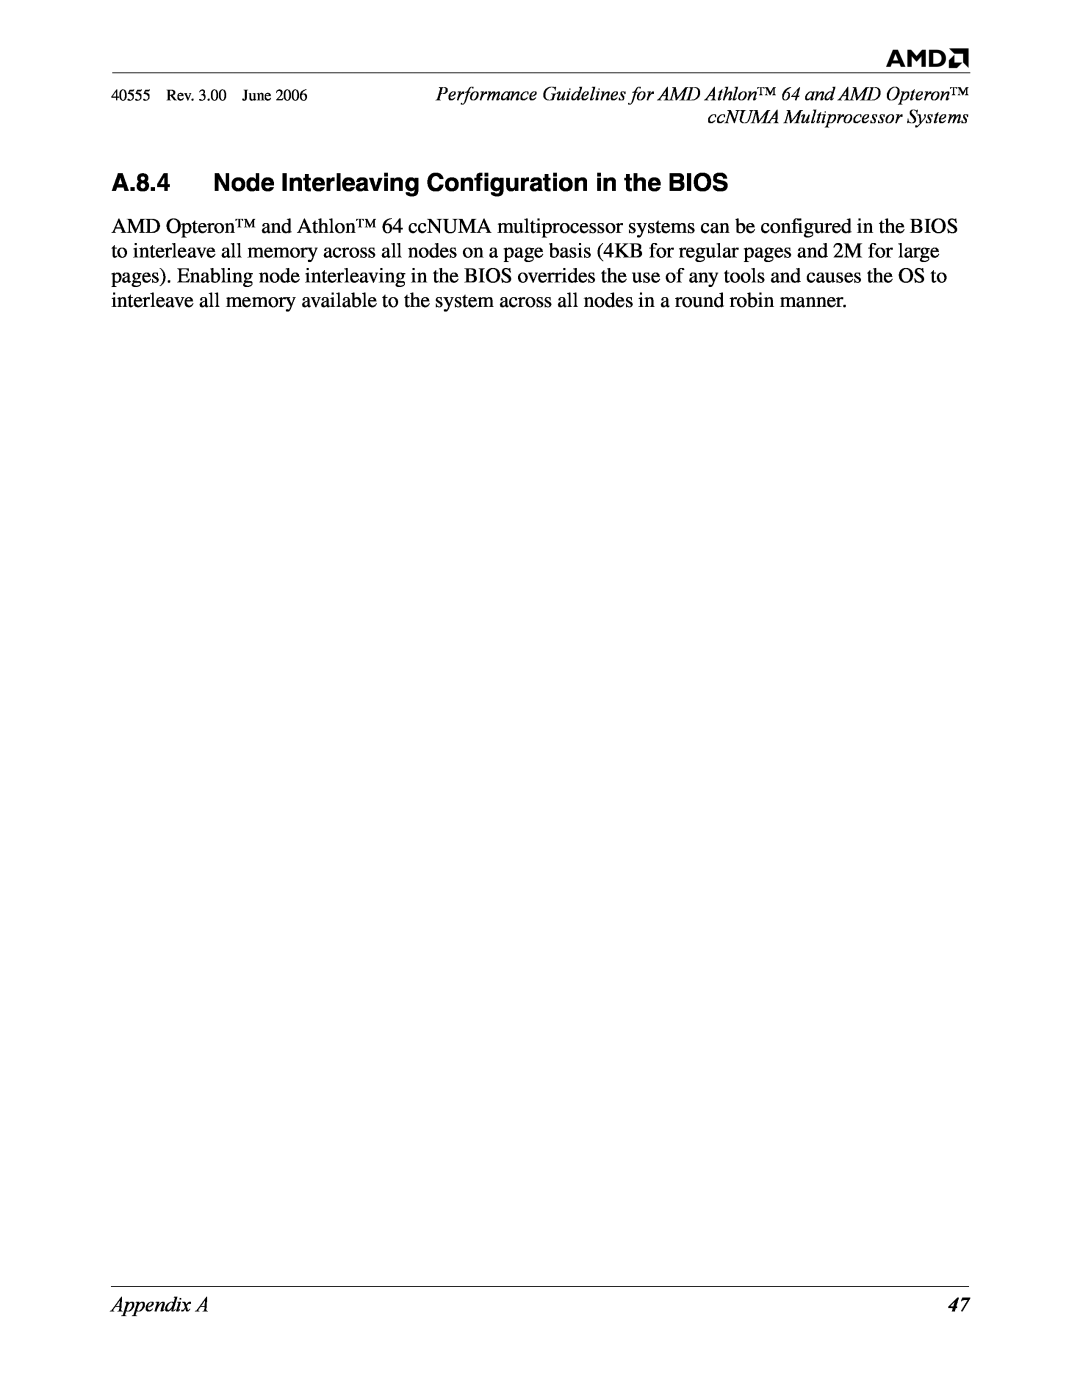 AMD 64 manual A.8.4 Node Interleaving Configuration in the BIOS, Appendix A 